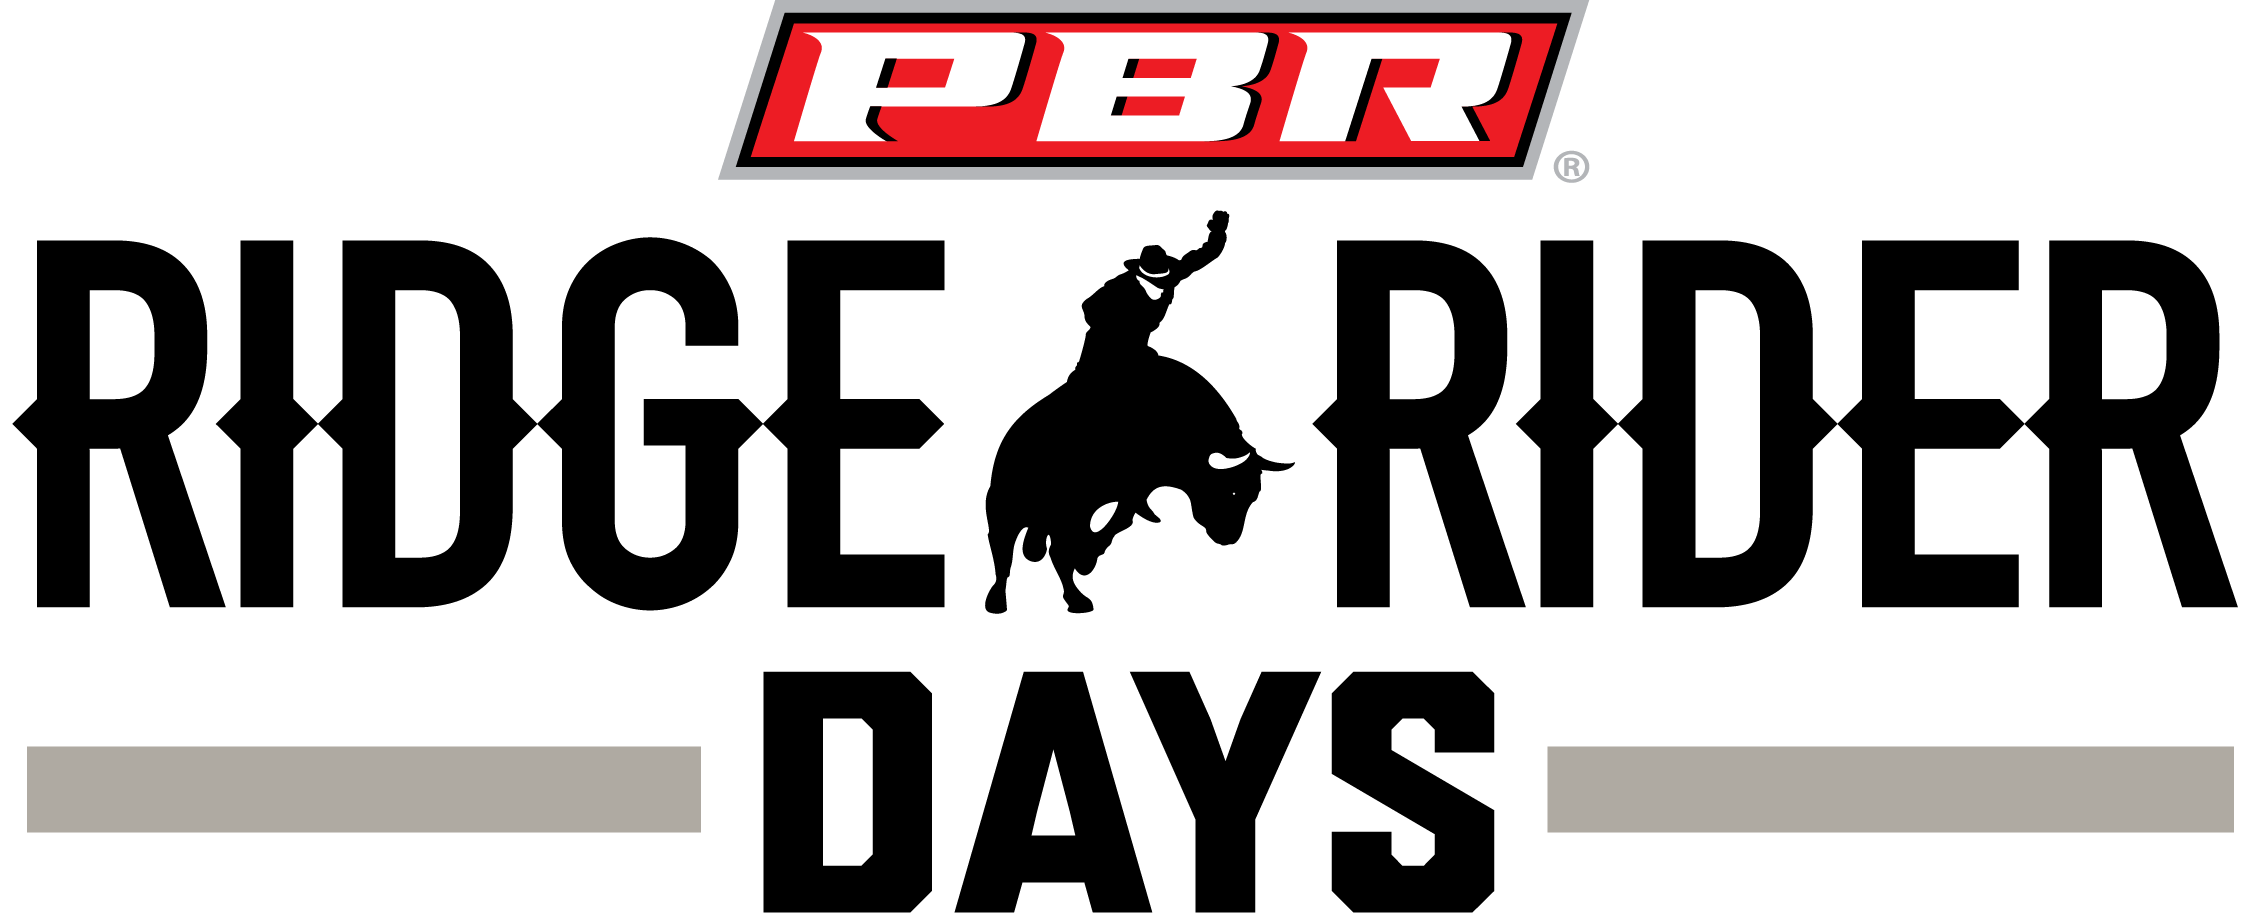 PBR Ridge Rider Days reversed